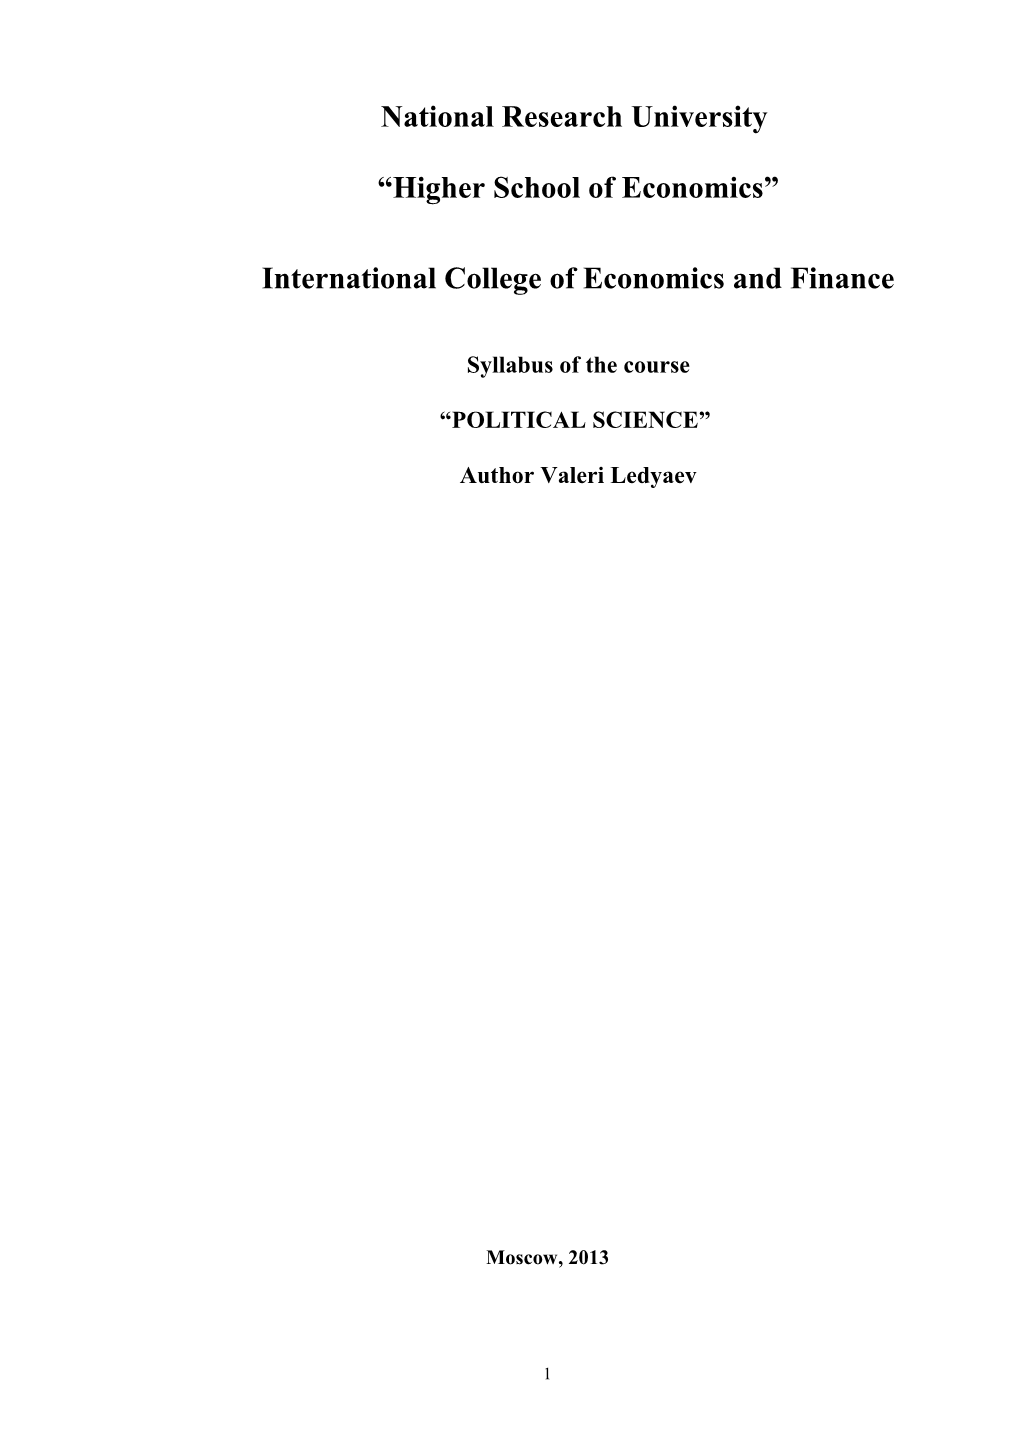 International College of Economics and Finance